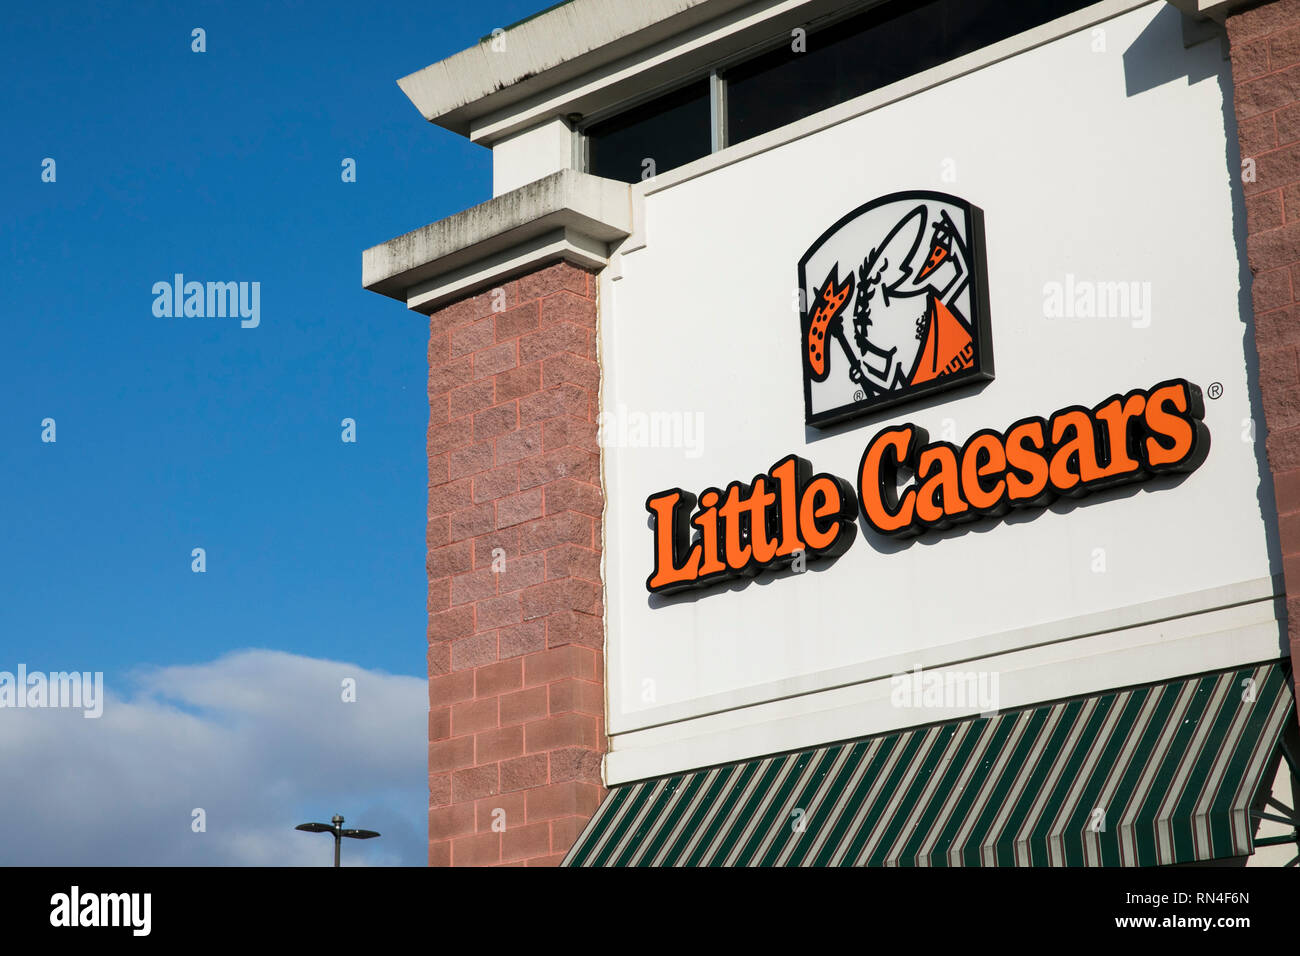 Little caesars logo fotografías e imágenes de alta resolución - Alamy